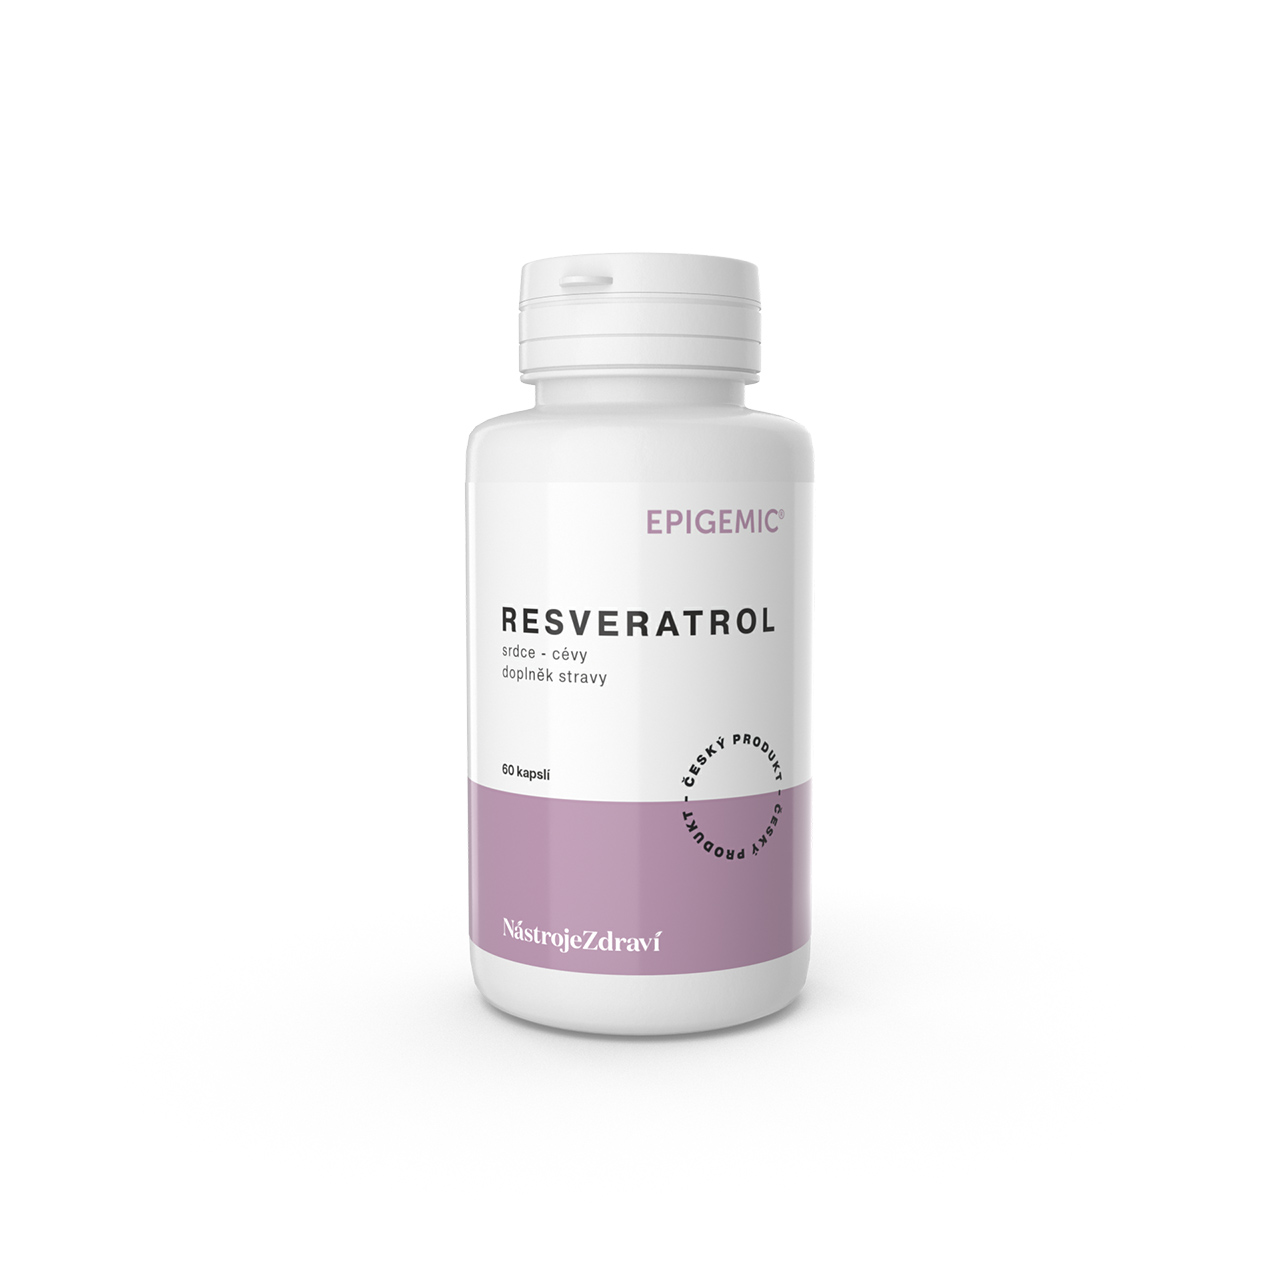 Epigemic Resveratrol 60 kapslí